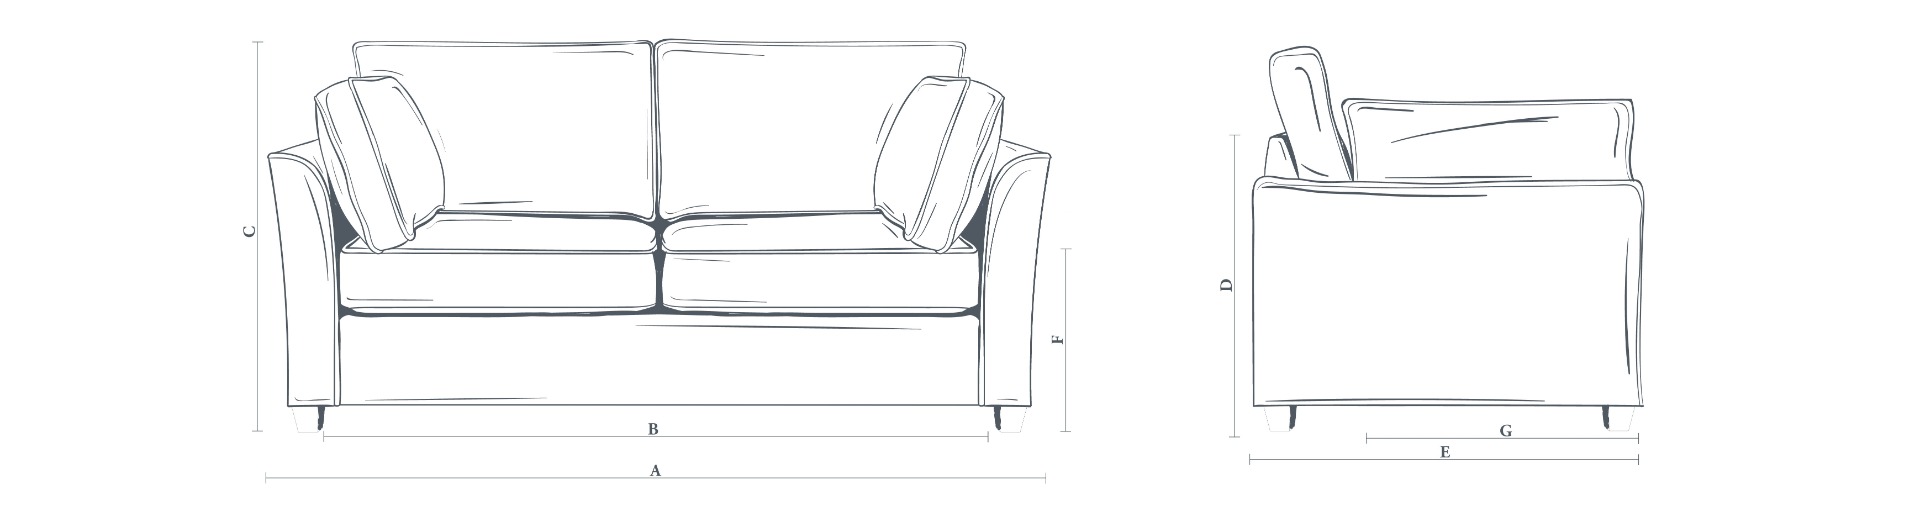 The Elmley Sofa 3.5 Seater